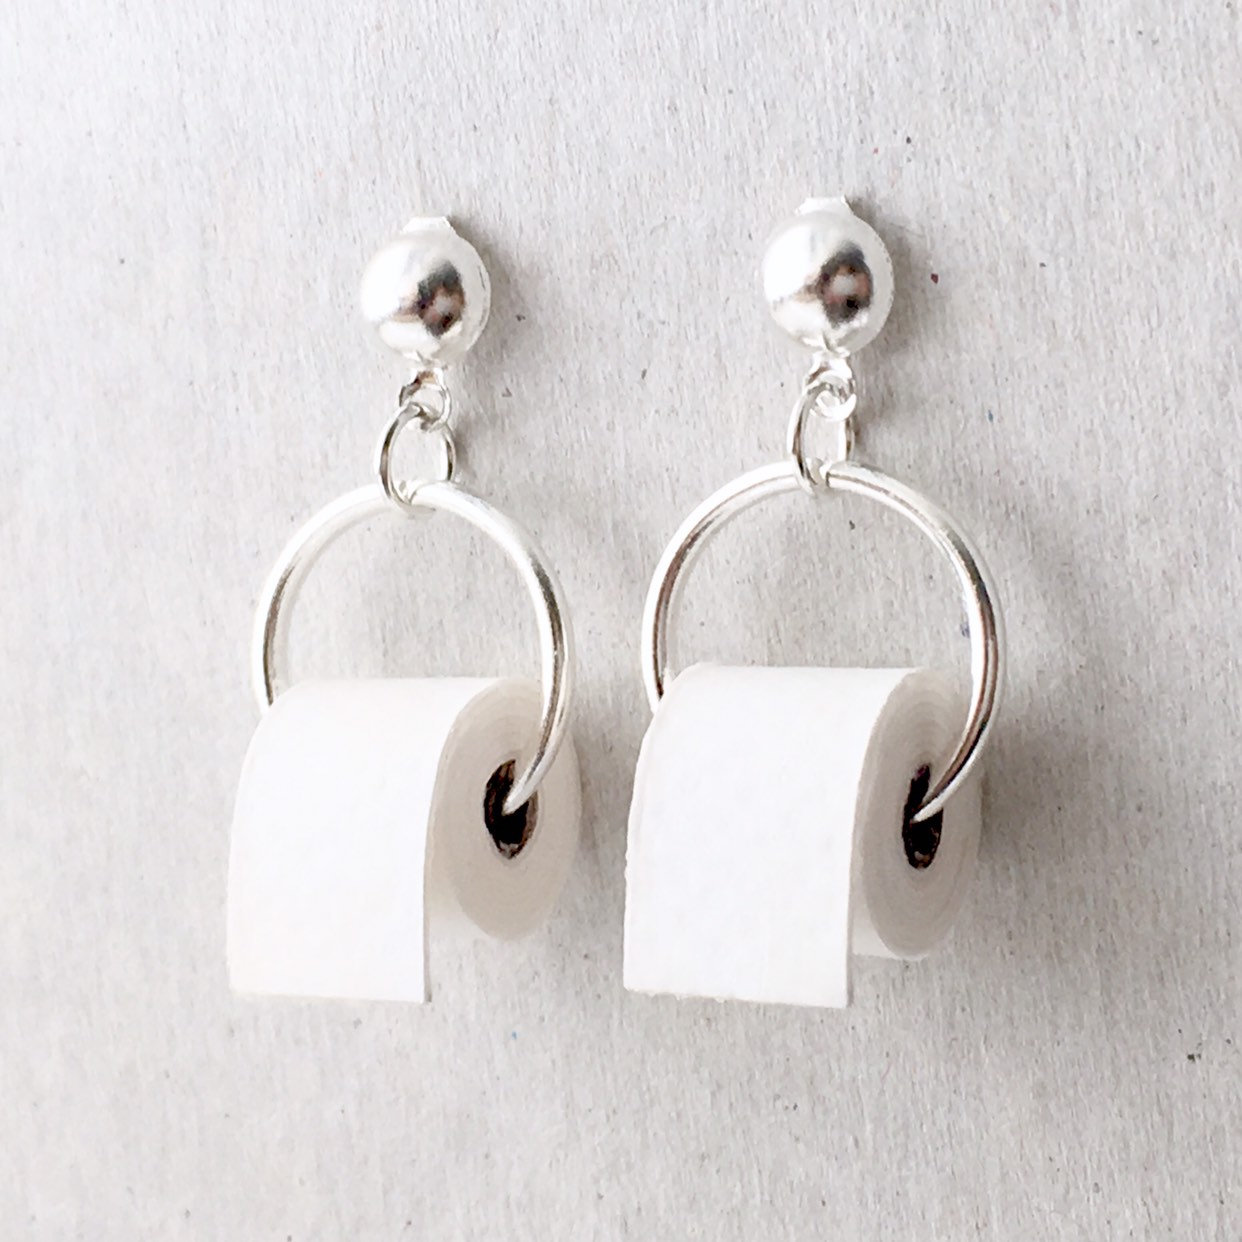 quirky-earrings-toilet-paper-earrings.jpg